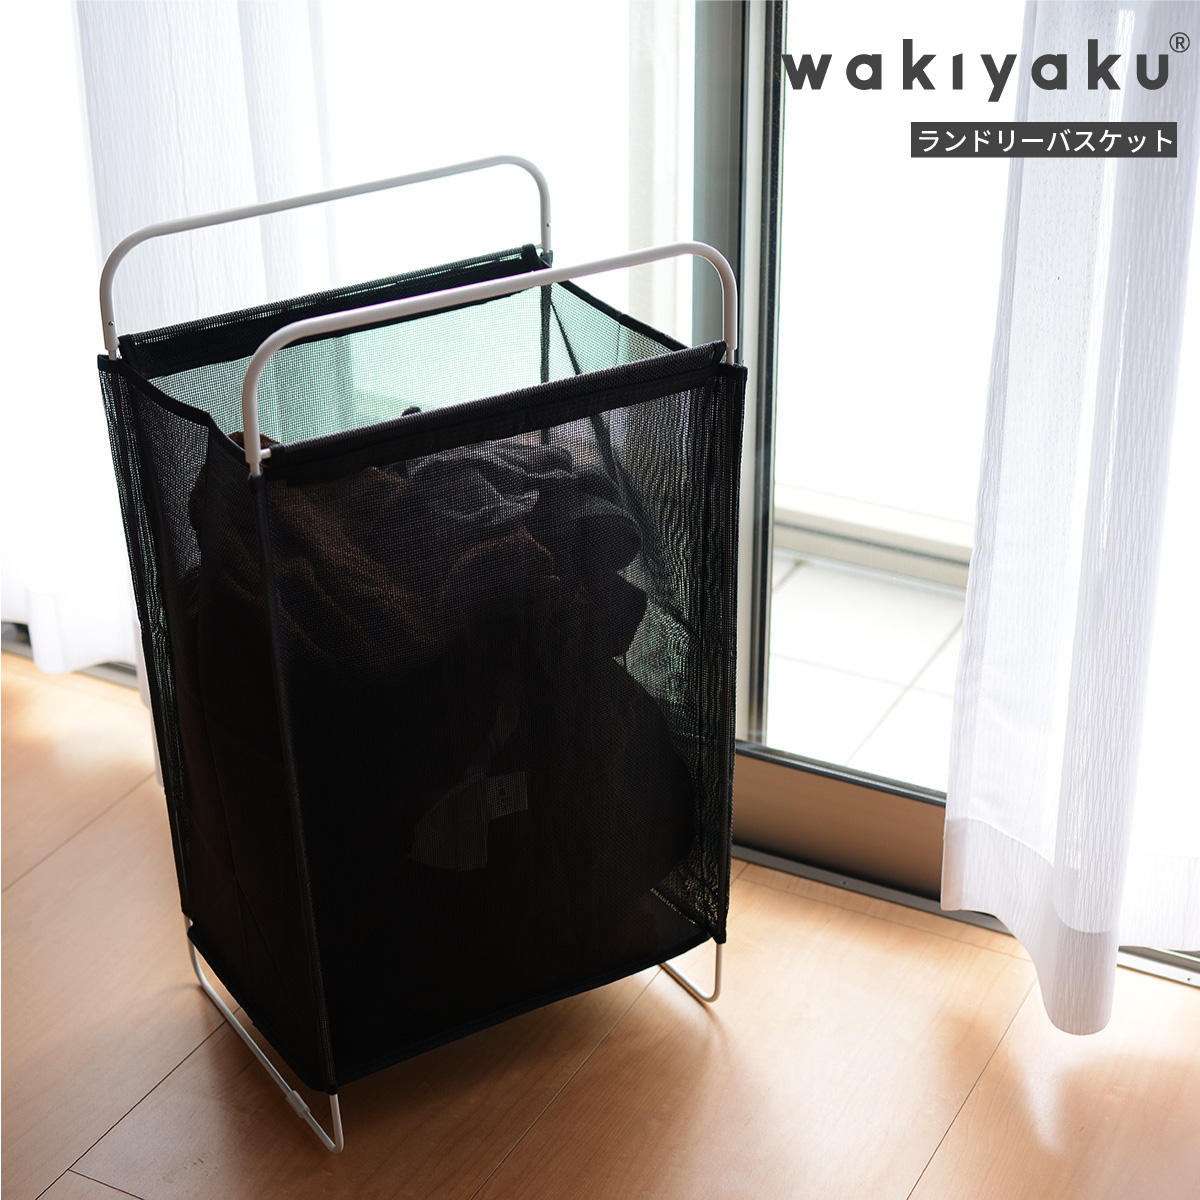 Wakiyaku R 洗濯かご ランドリーバスケット ランドリーバッグ ランドリーボックス 大容量 おしゃれ 大容量洗濯 洗濯物 収納 かご シンプル 宅配便送料無料